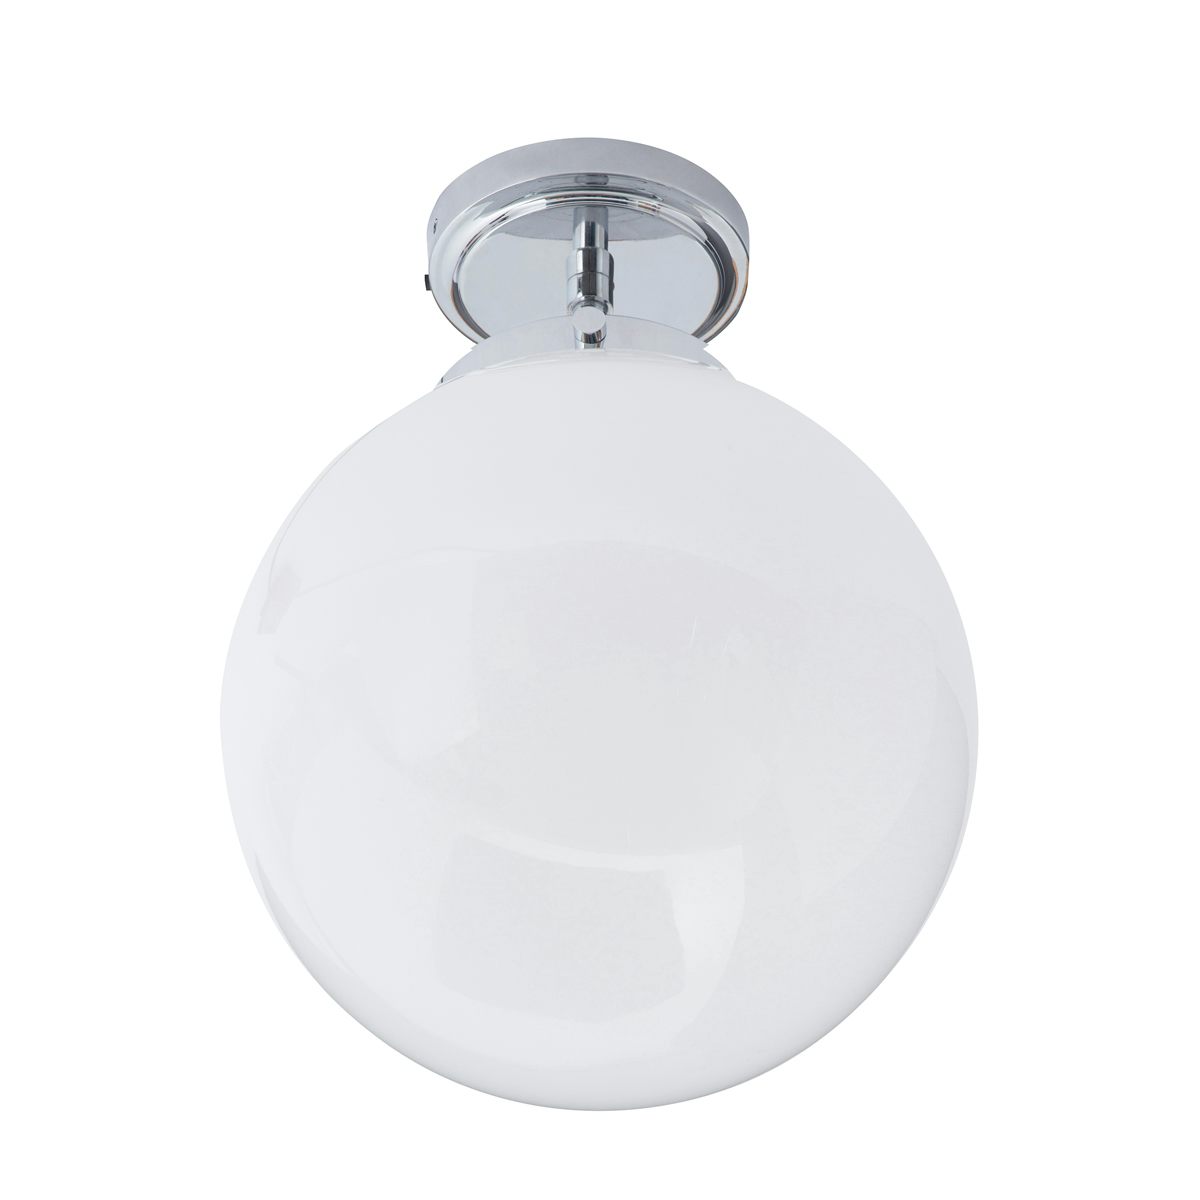 Forum Luna 1 light semi flush bathroom ceiling light